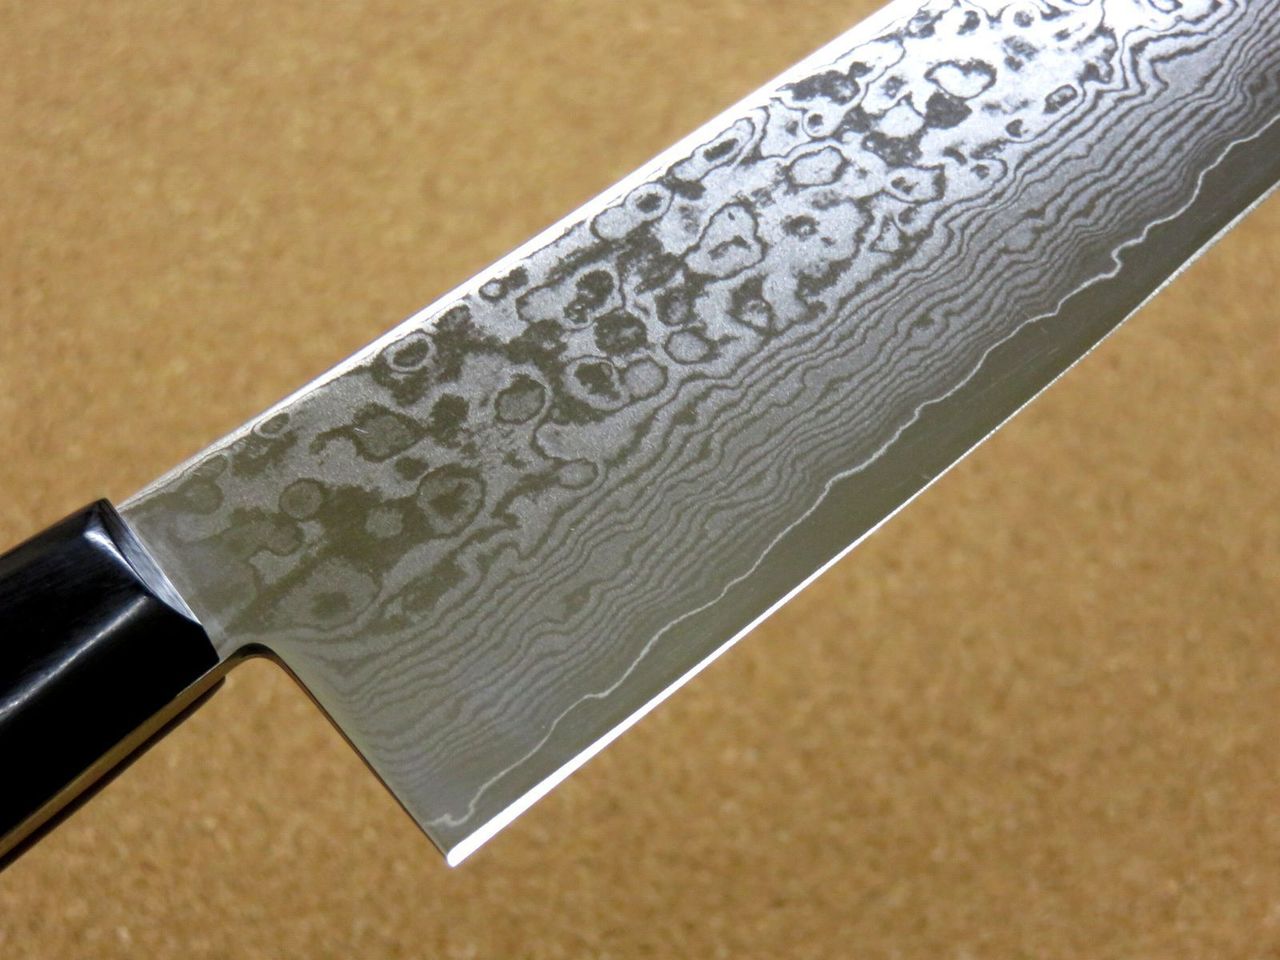 Japanese SETO ISEYA-G Kitchen Gyuto Chef's Knife 8.3" VG-10 Damascus SEKI JAPAN